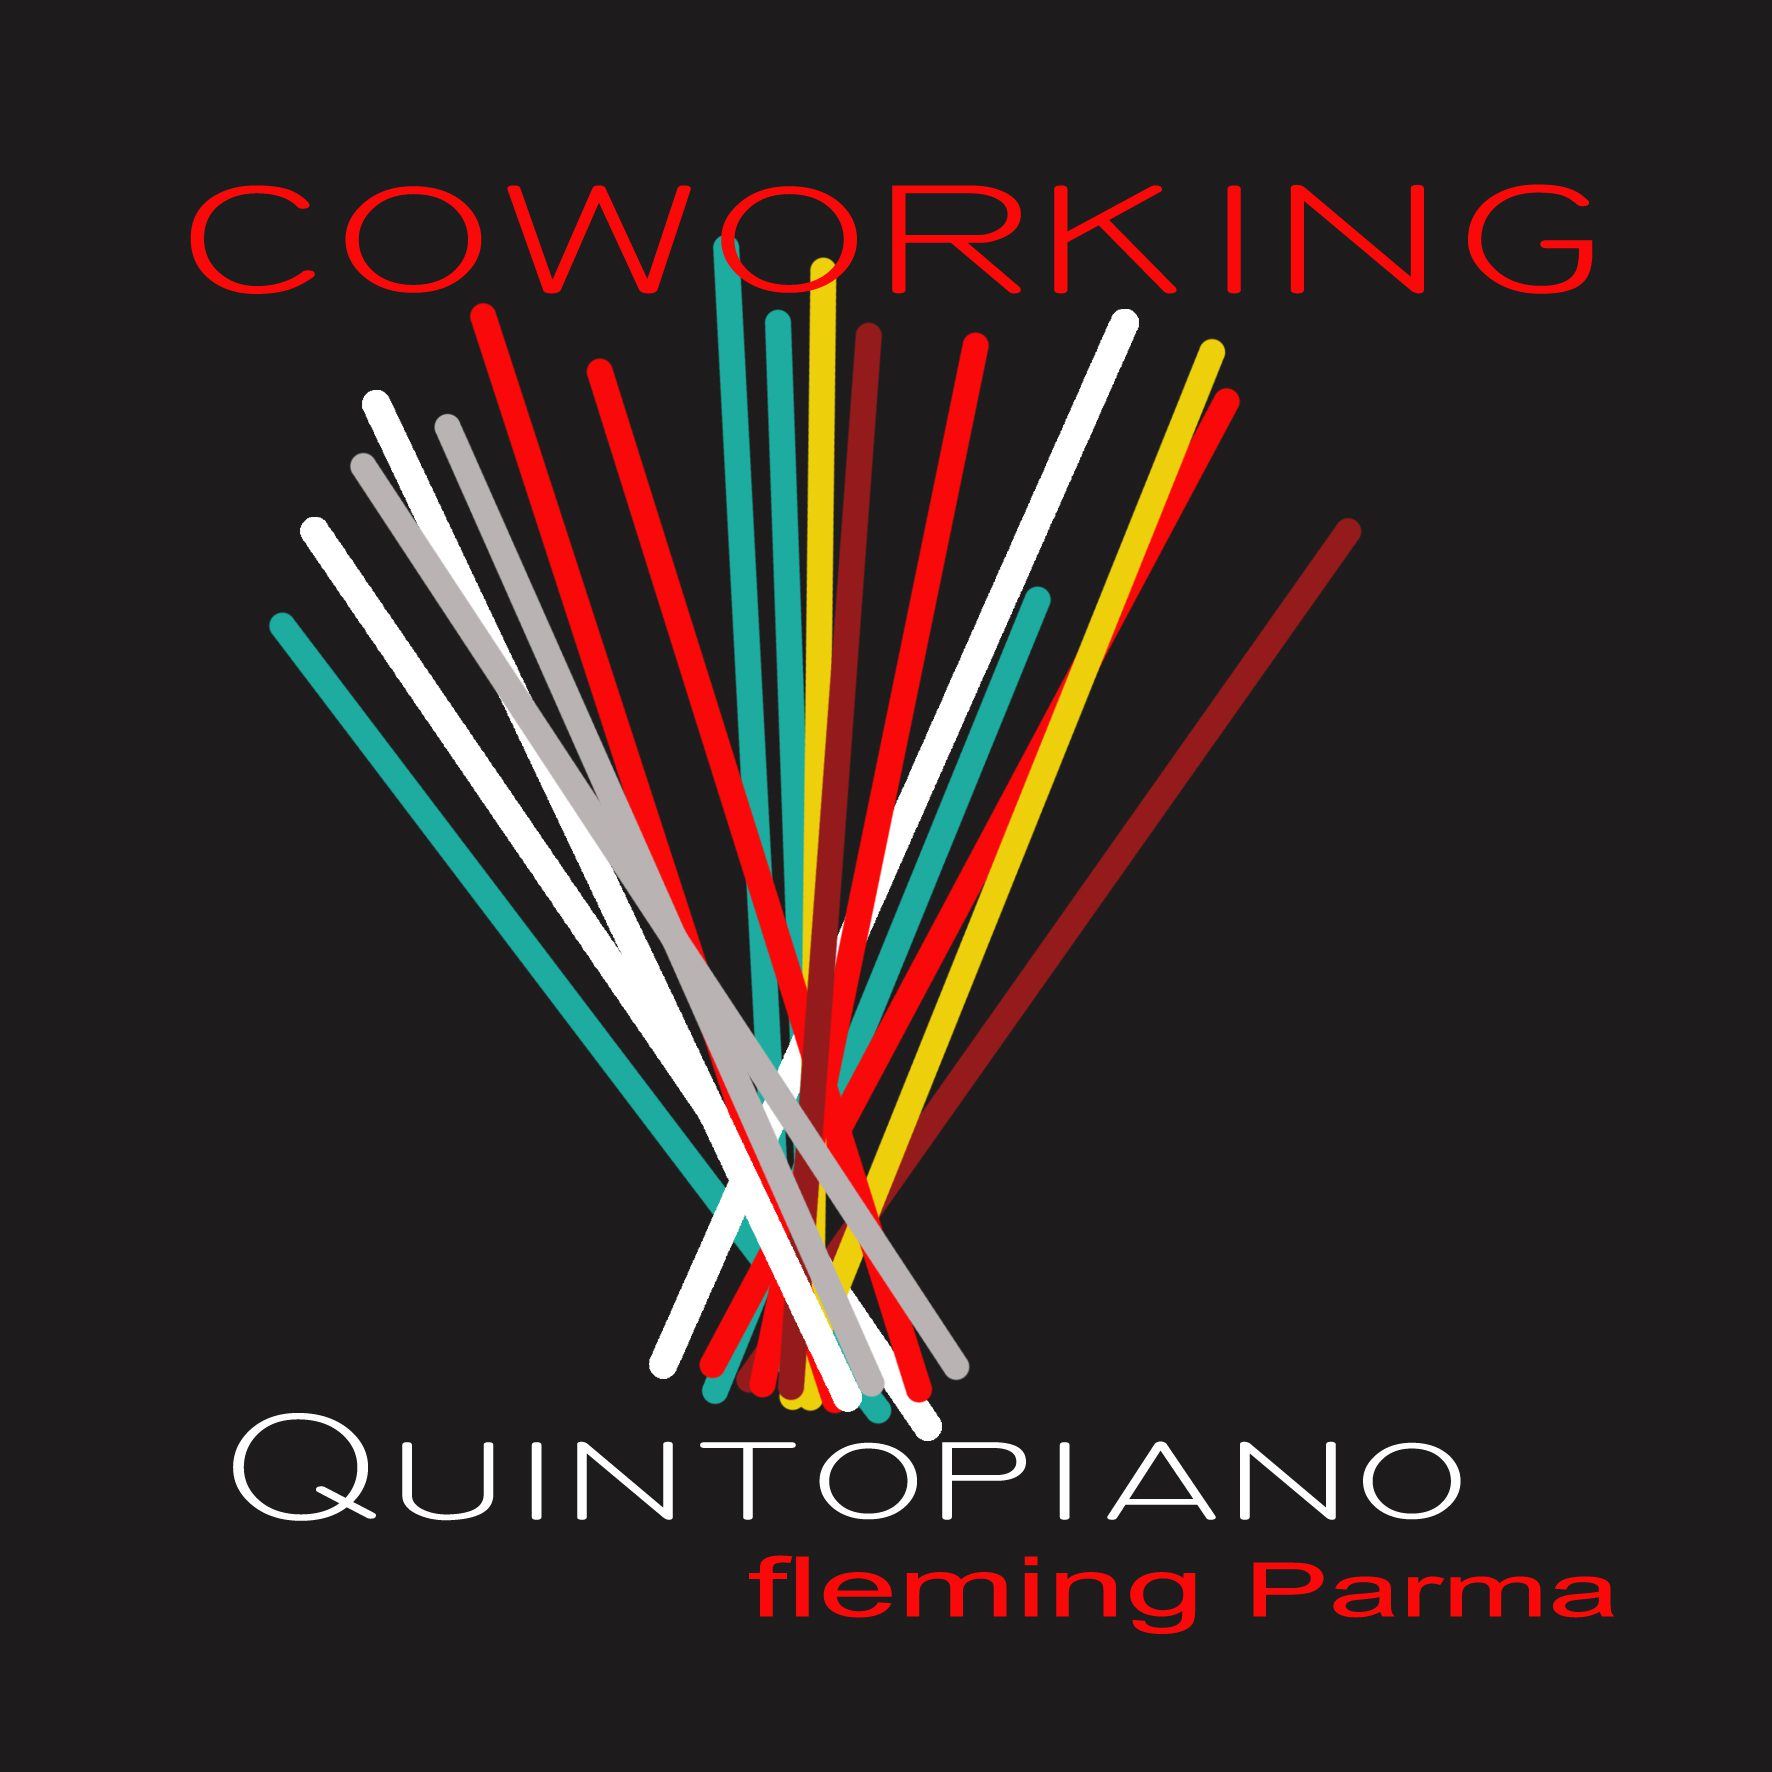 Coworking Quintopiano fleming Parma